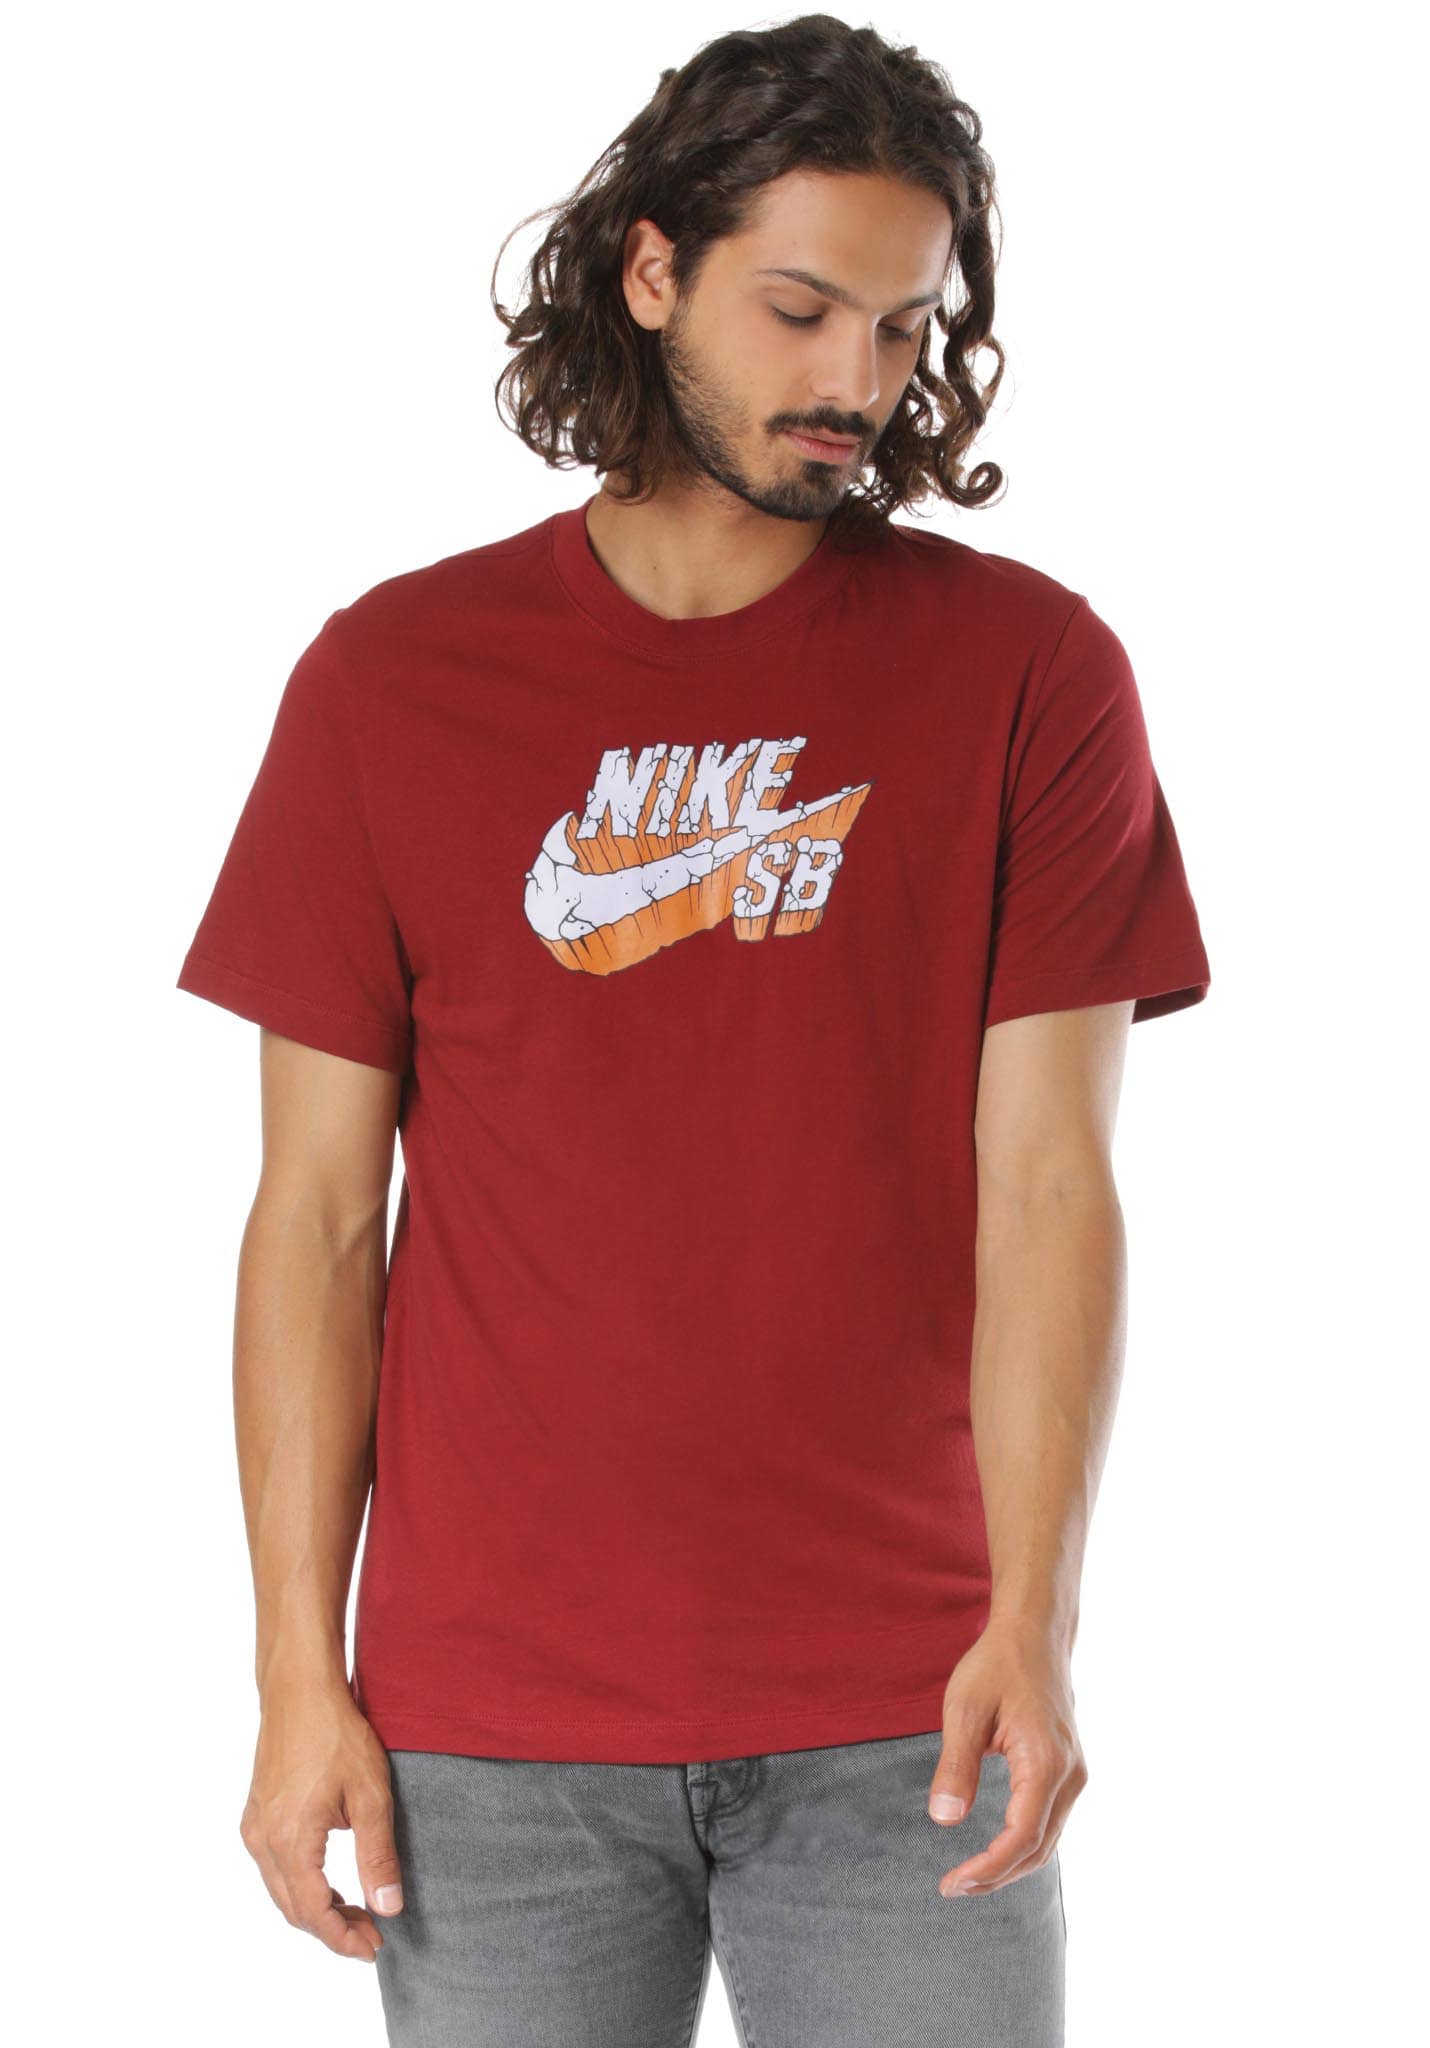 Nike Snowboarding Concrete T-Shirt team rot XL